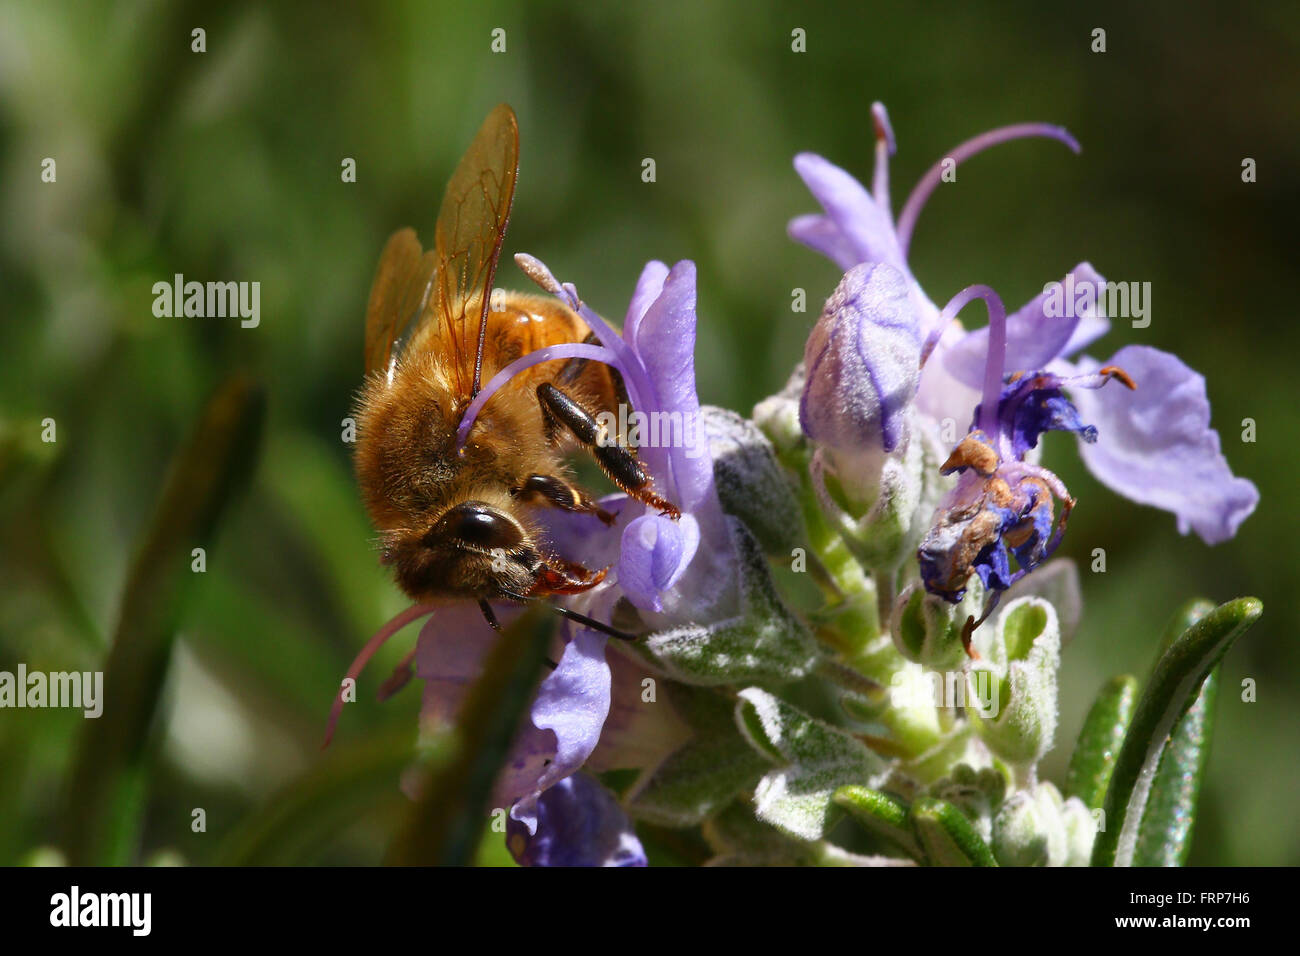 Honeybee going through a rosemary flower Stock Photo